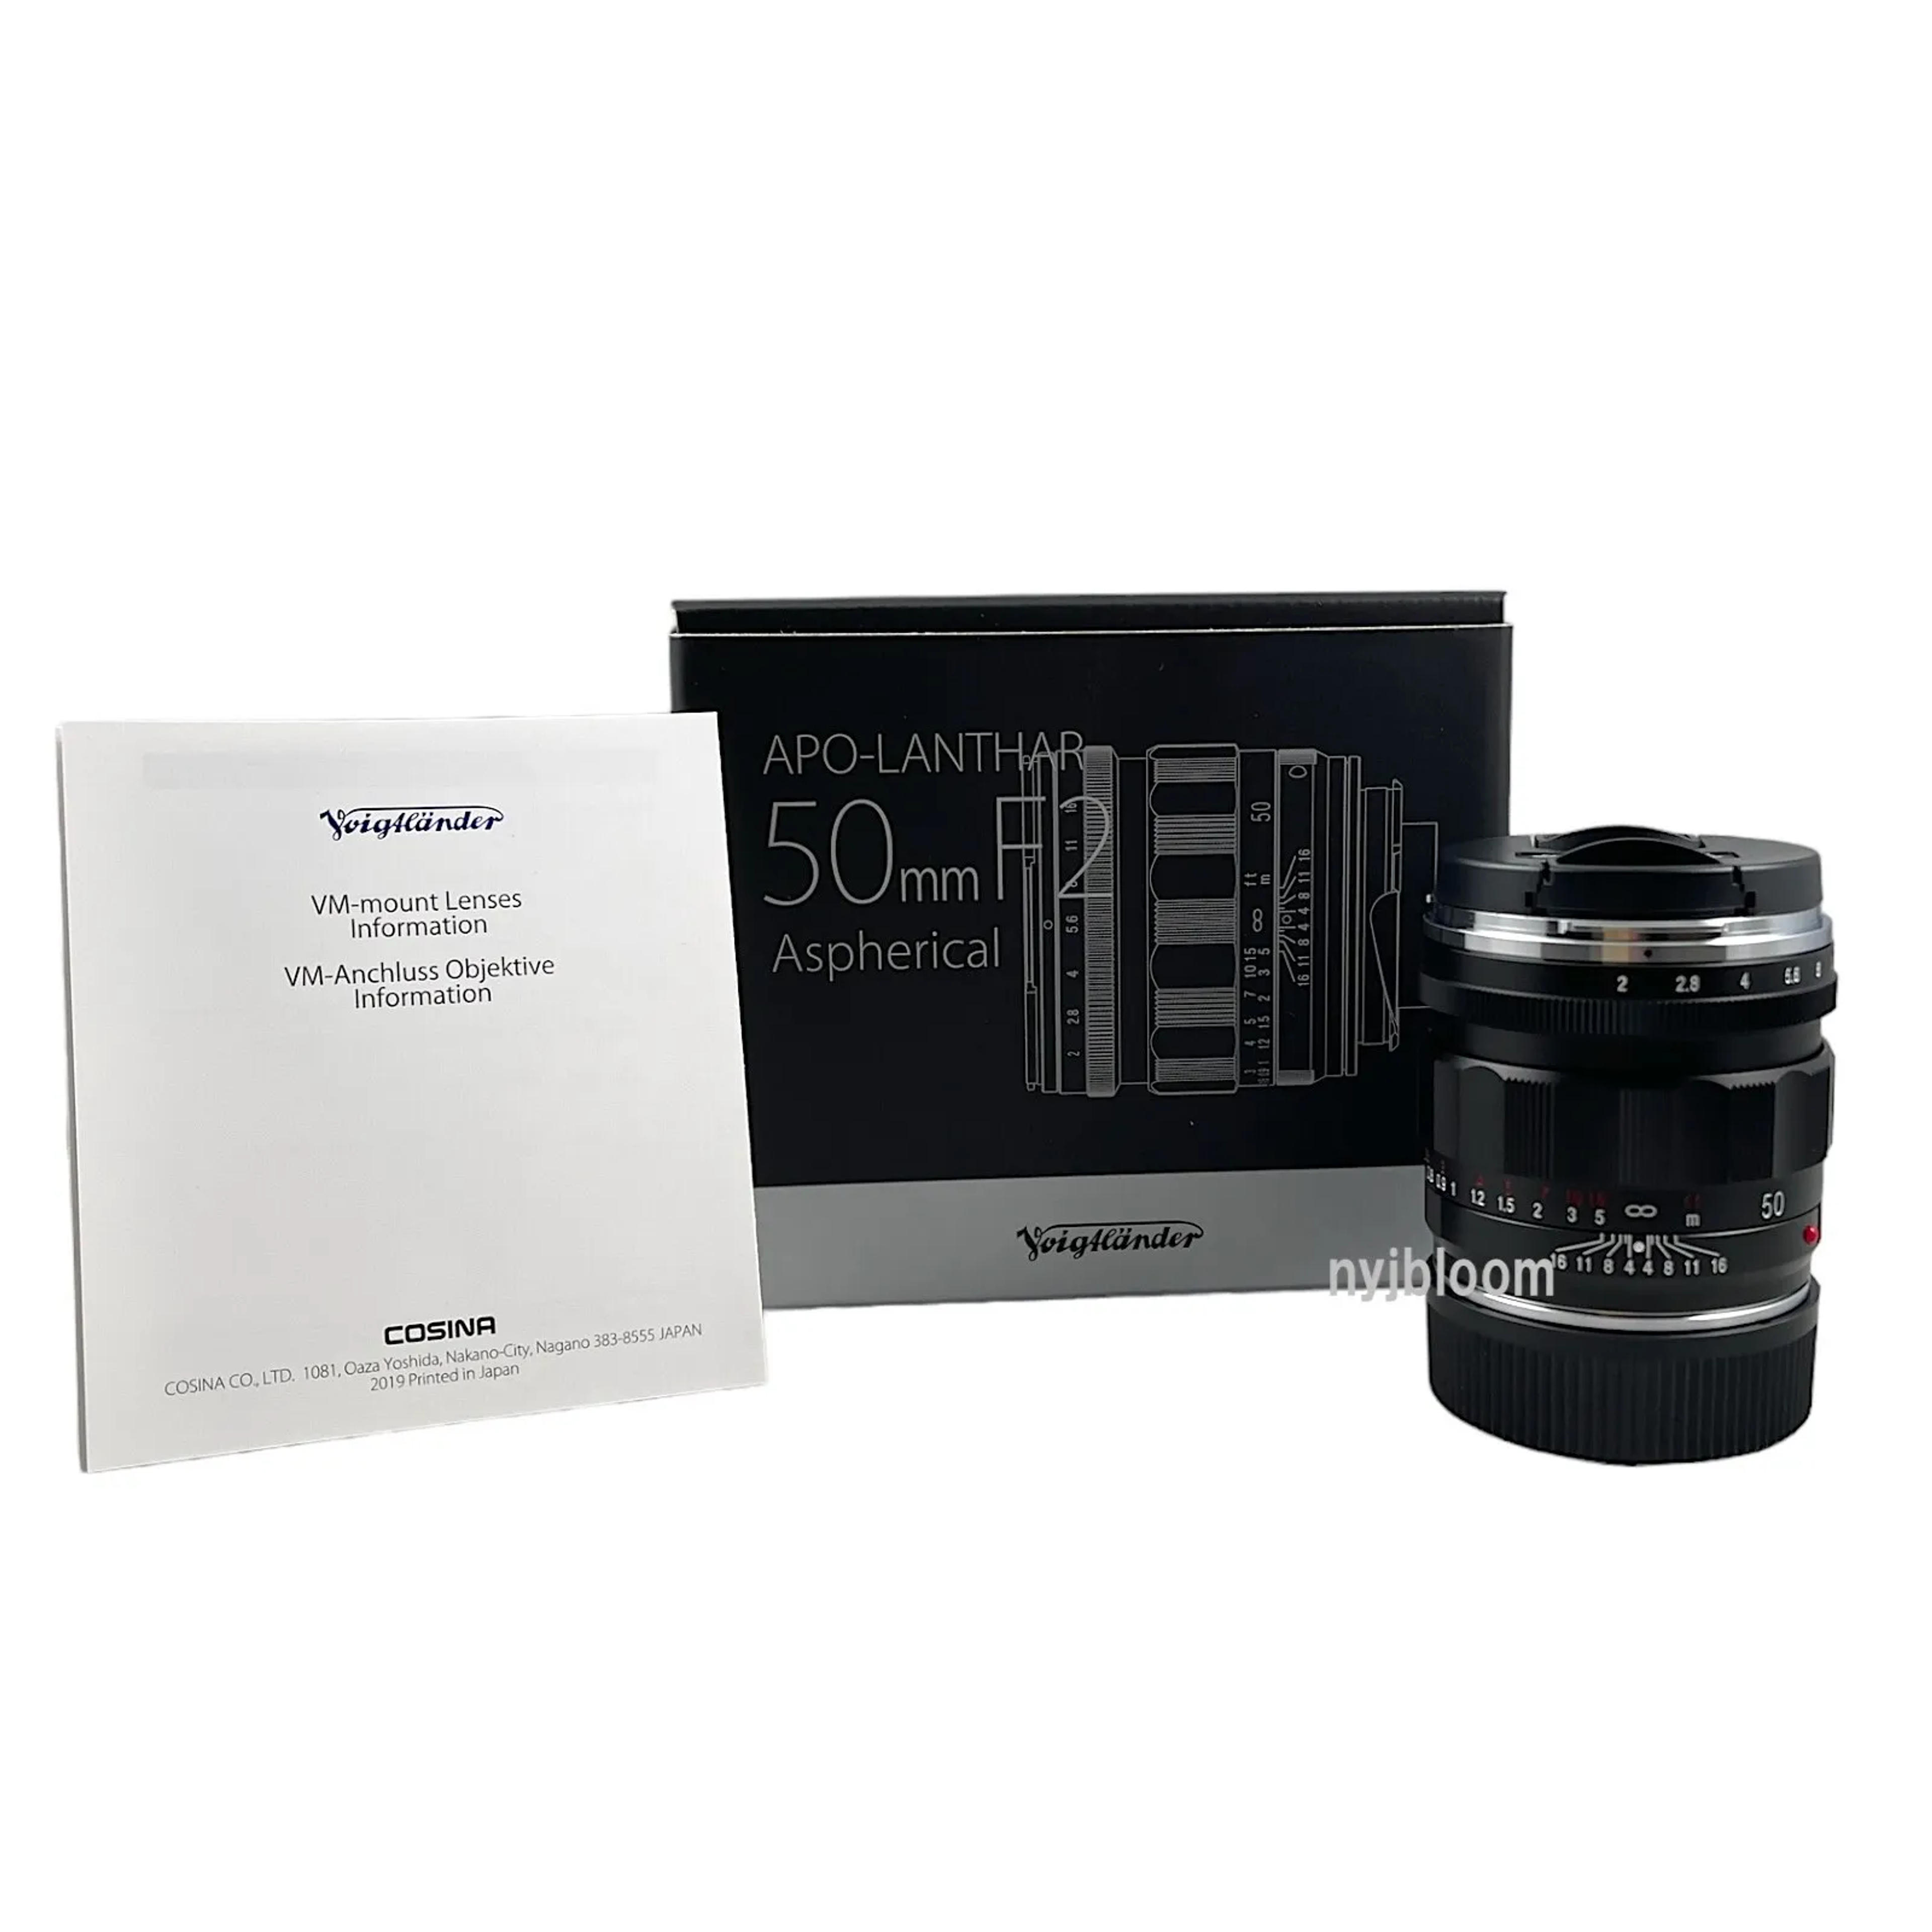 New VOIGTLANDER APO-LANTHAR 50mm f/2 Aspherical VM Mount Lens Manual Focus | eBay